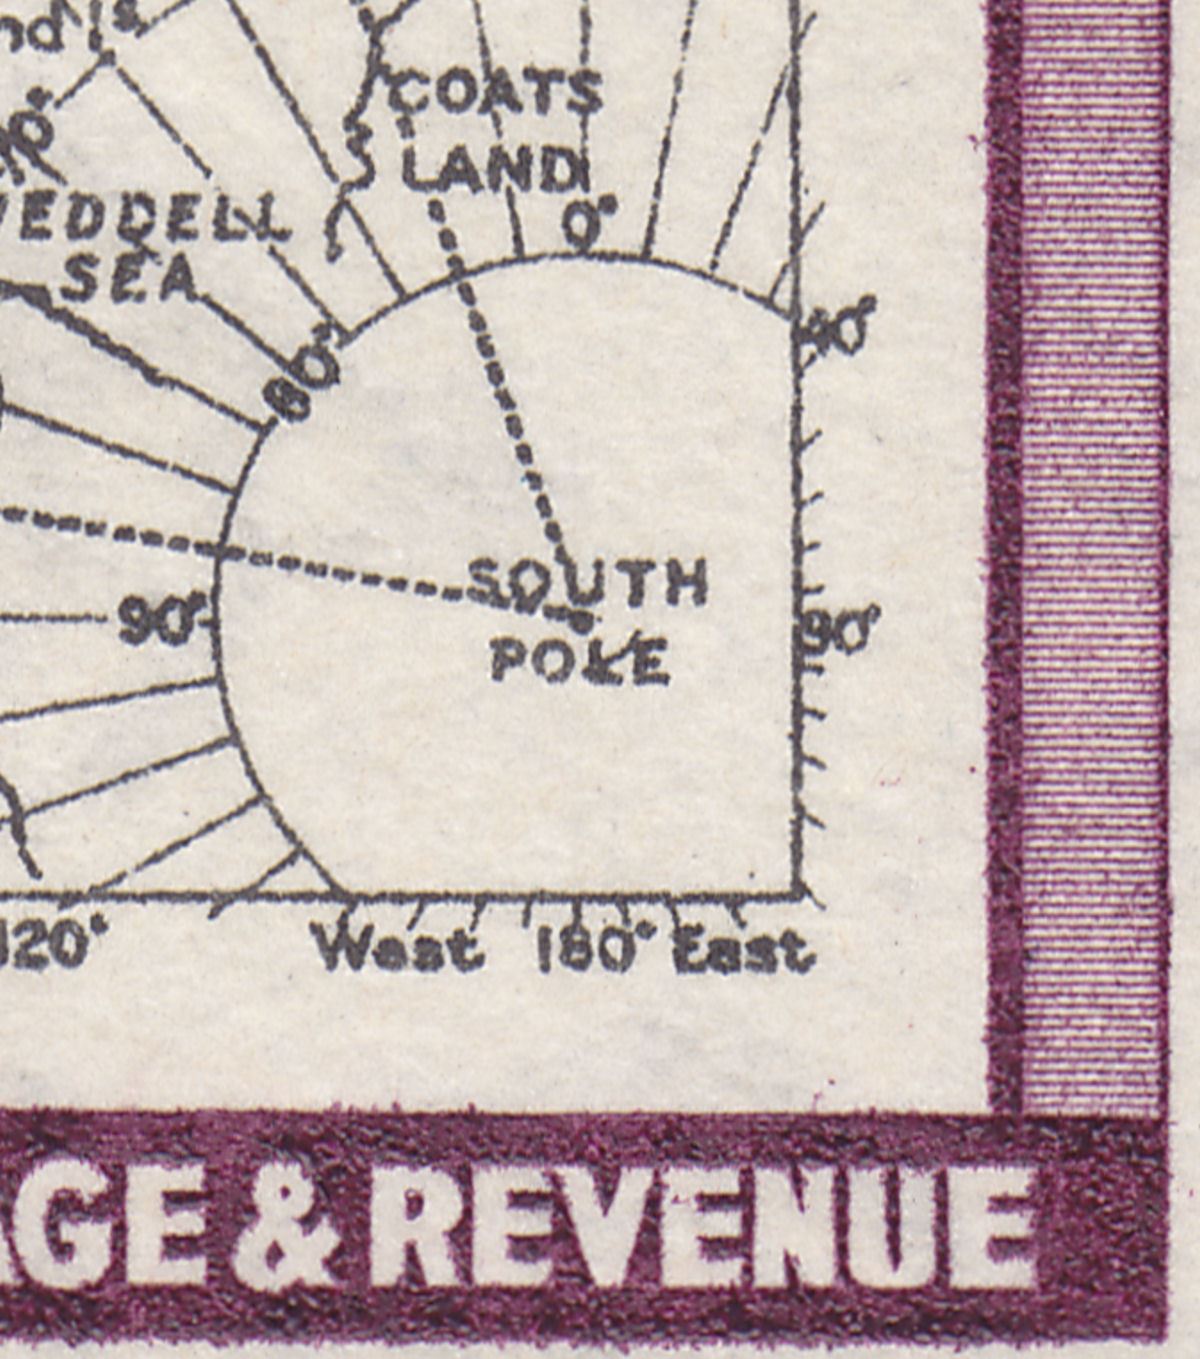 Falkland Islands Dependencies 1946 KGVI 1sh Variety SOUTH POKE Mint SG G8c c£150